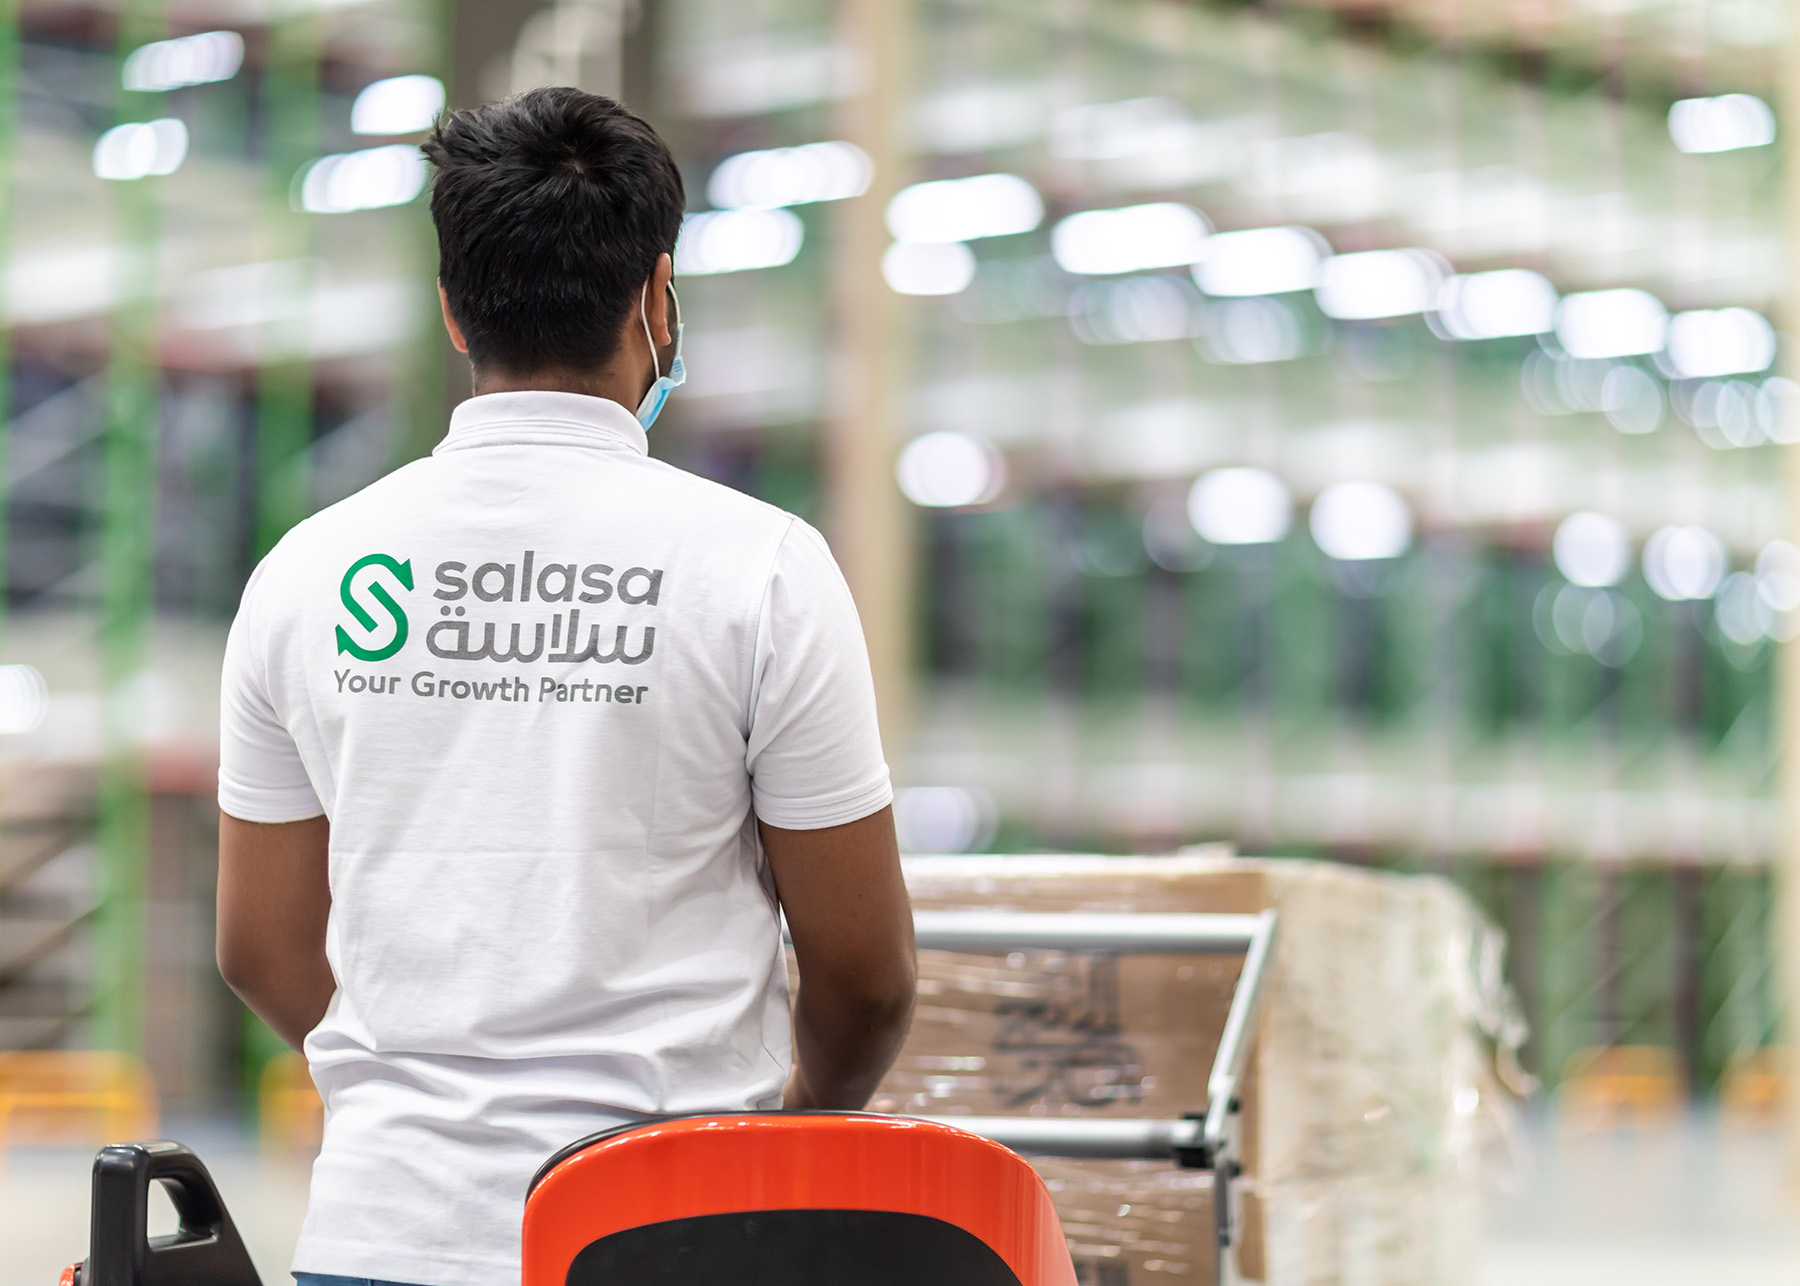 An employee wearing a Salasa shirt standing in a warehouse